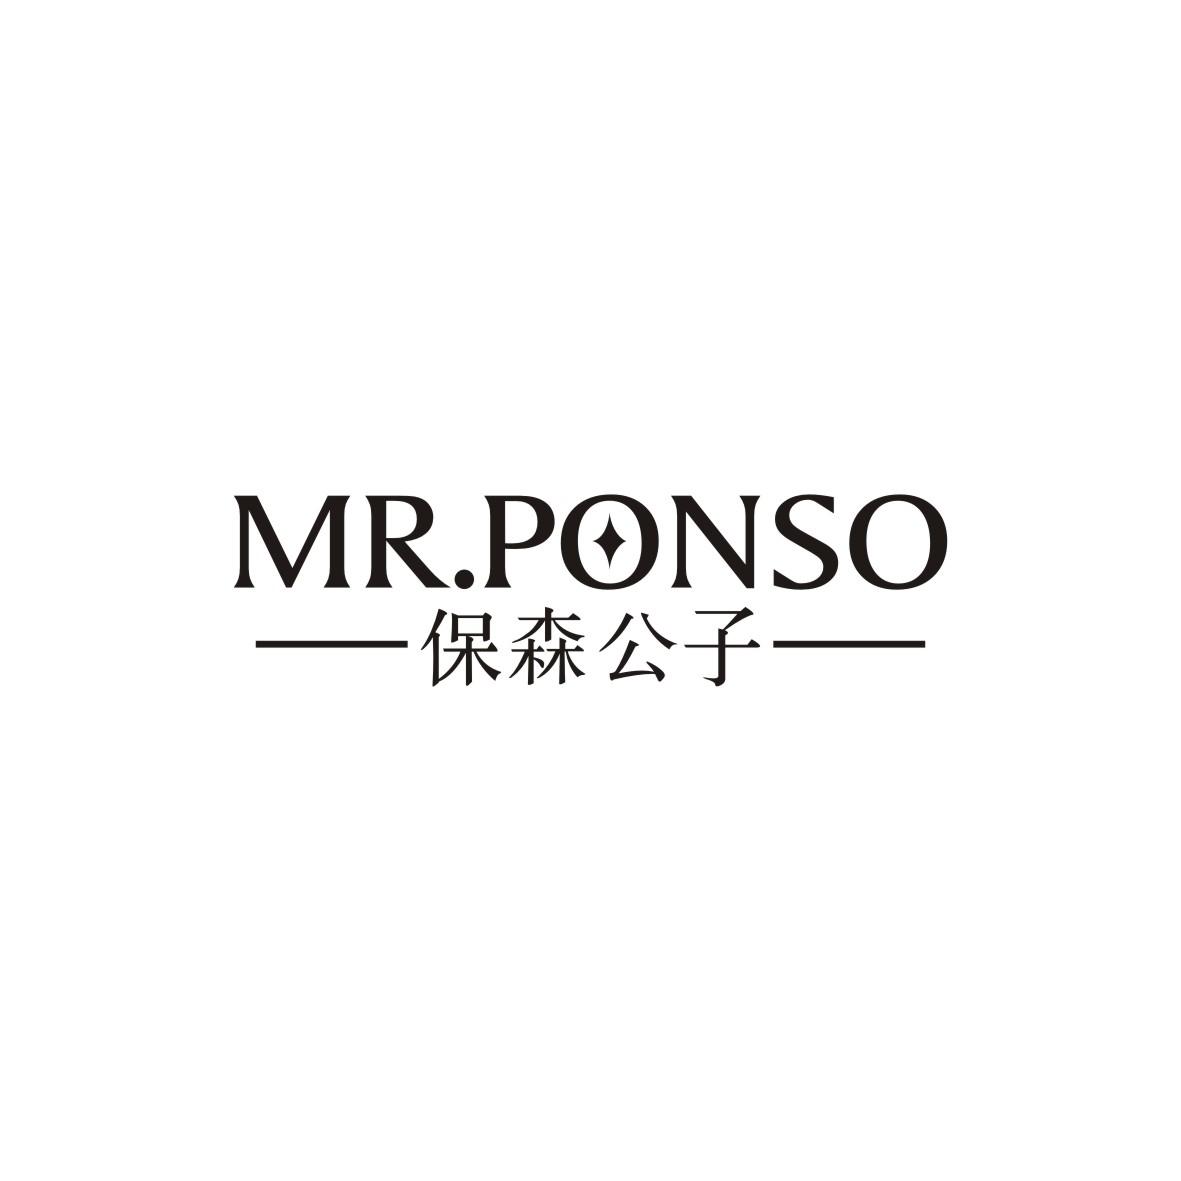 保森公子
MR.Ponsoyueqingshi商标转让价格交易流程